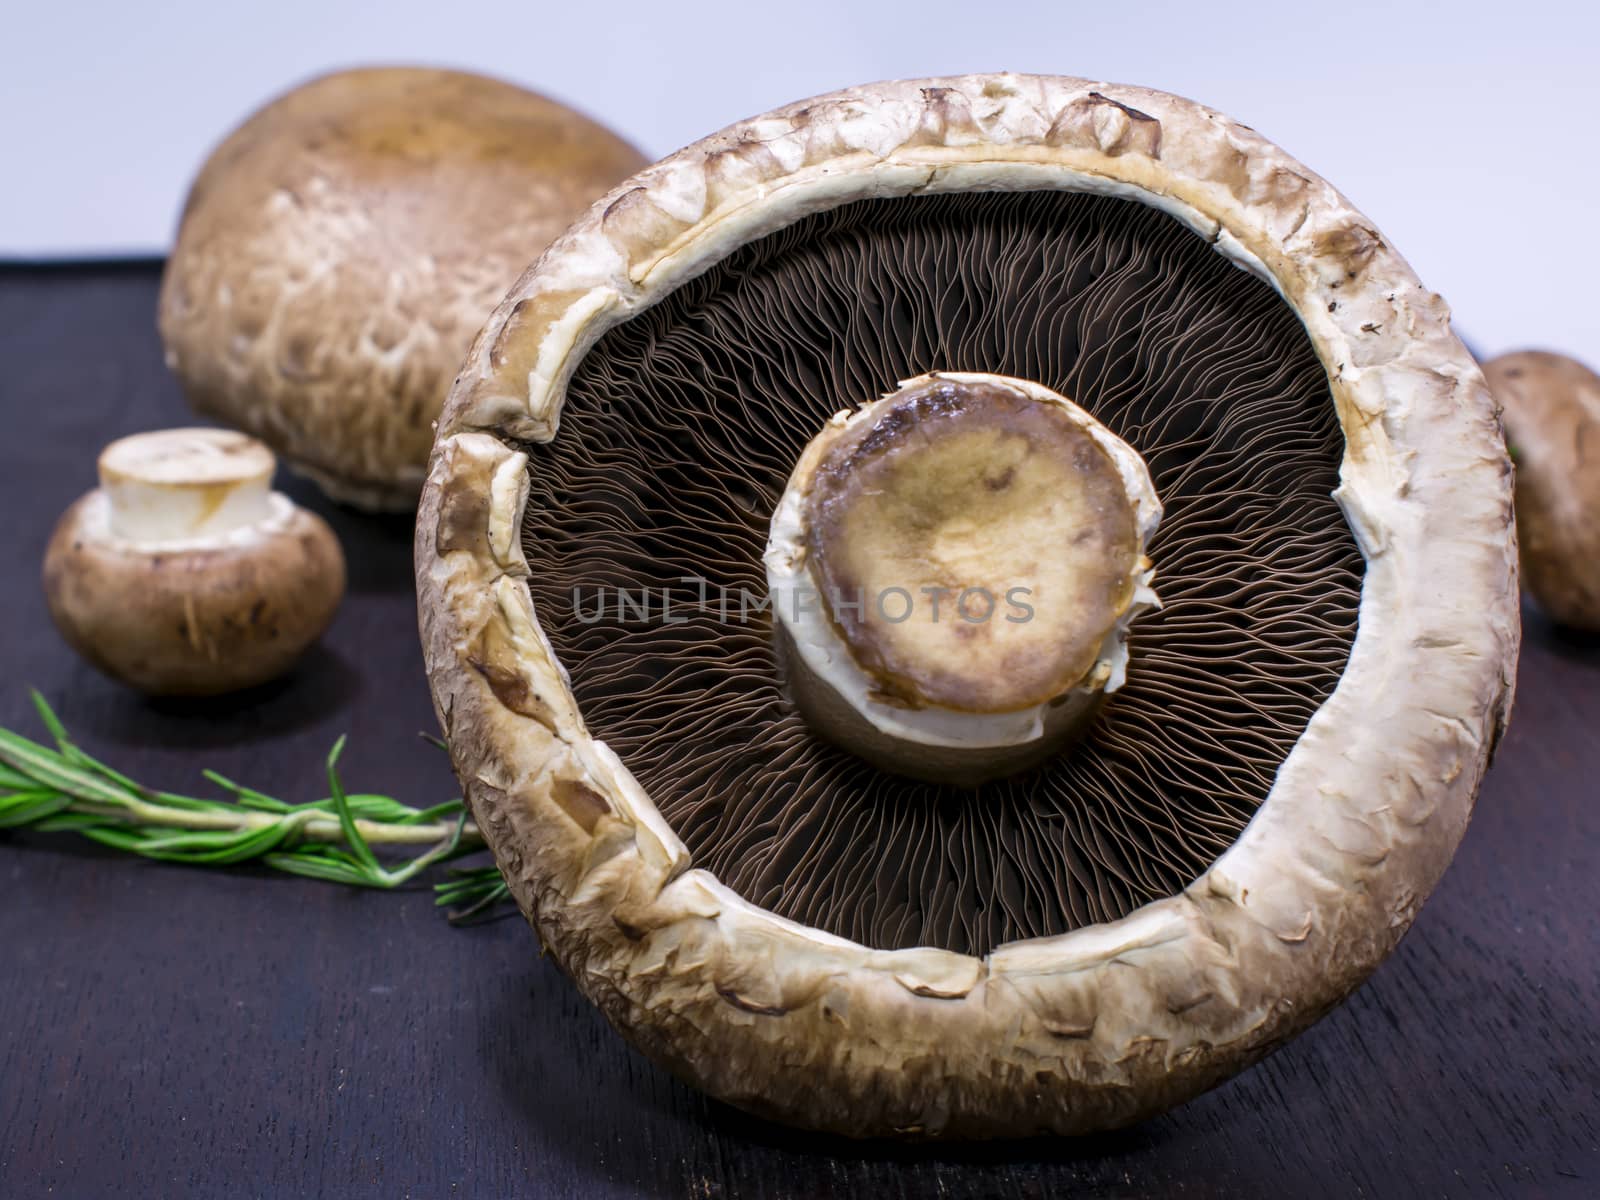 Huge Portobello Mushroom on Display with all its Glory